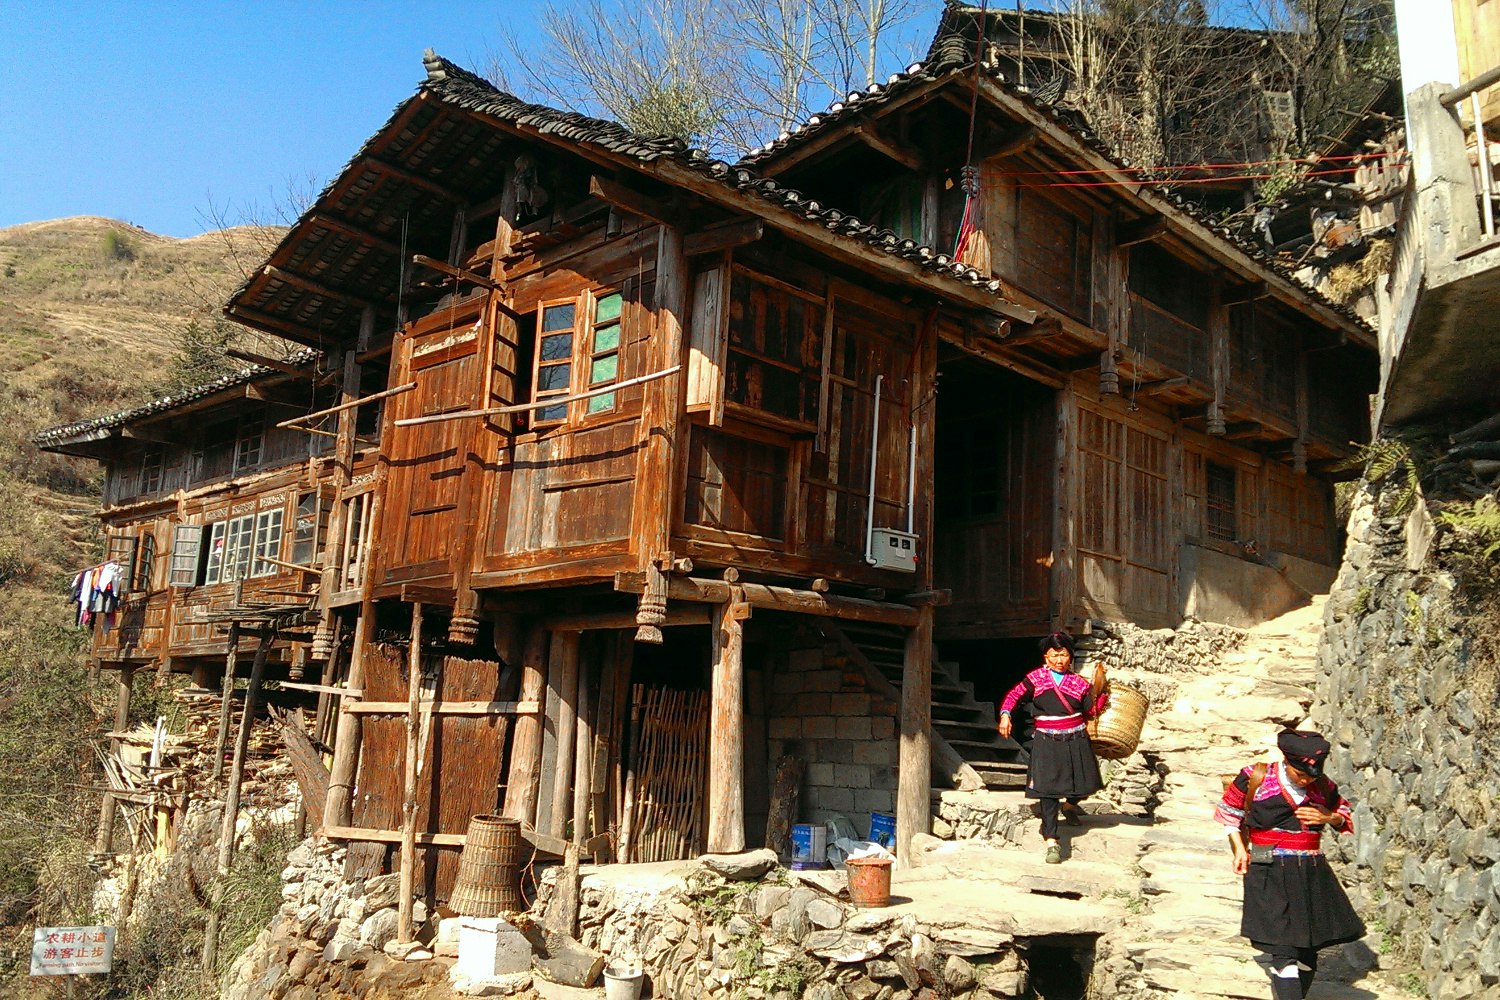 Yao minority women working outside a traditional Longji dwelling. Image by Piera Chen / Lonely Planet